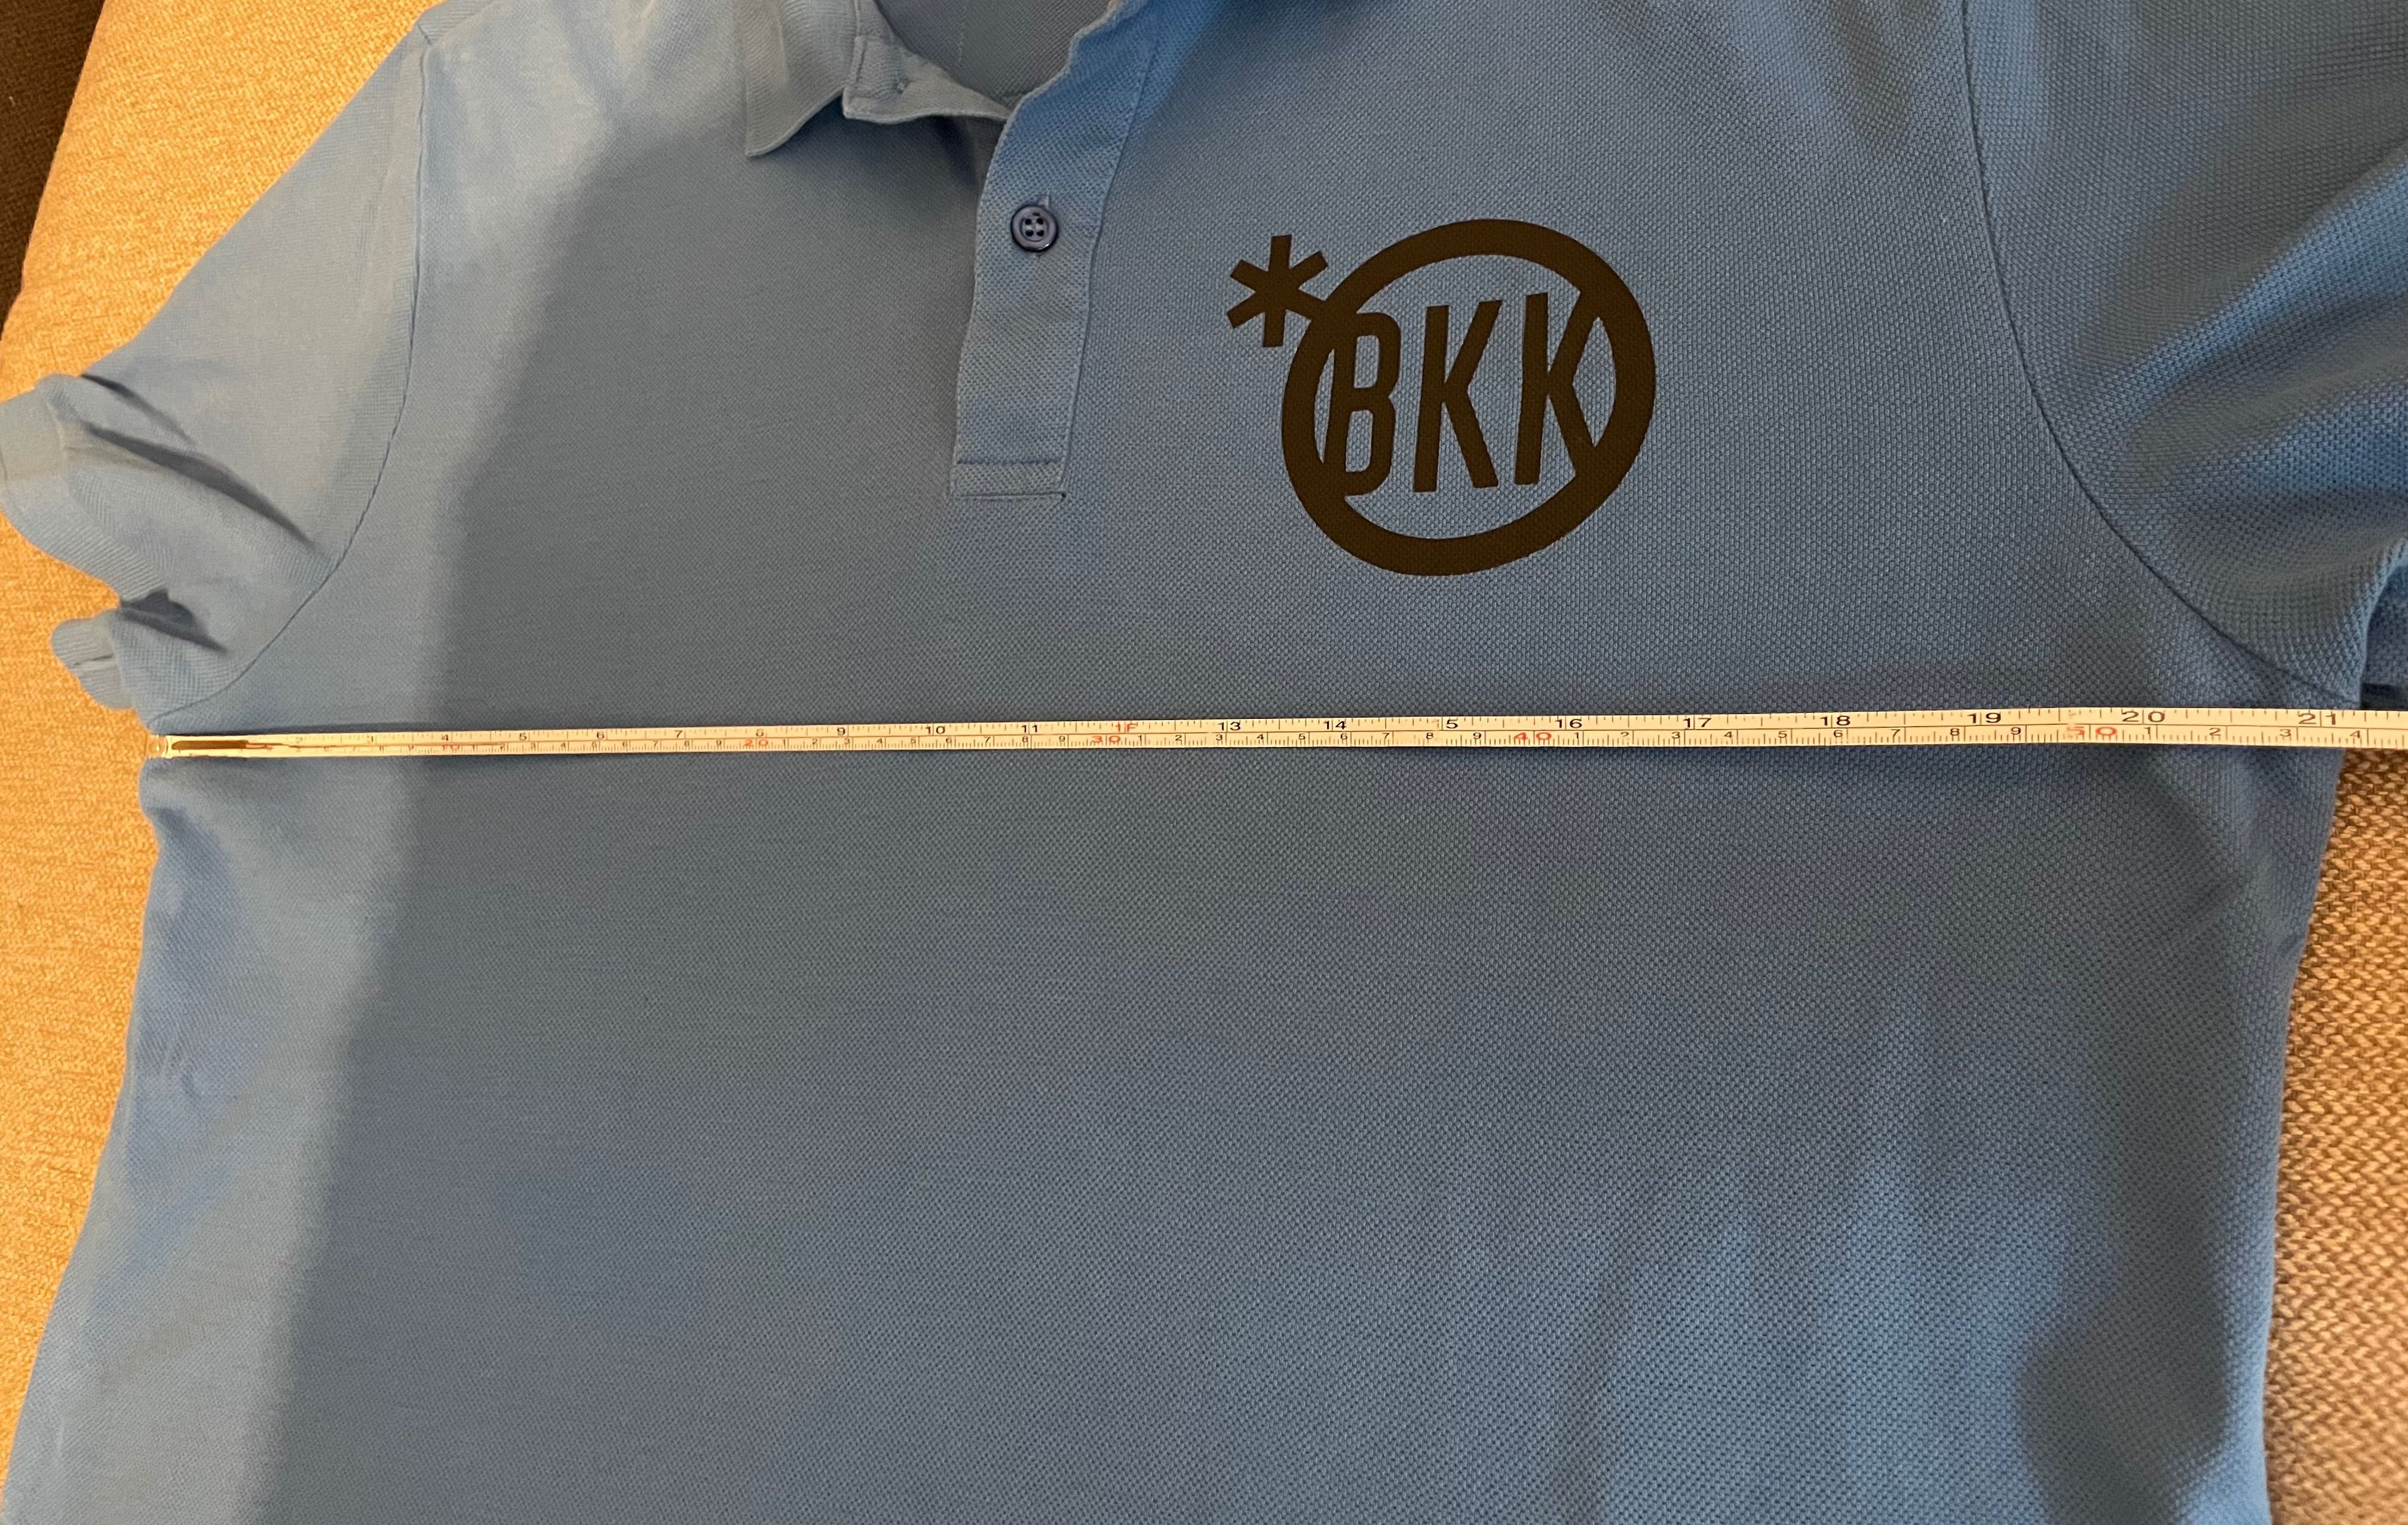 BIKKEMBERGS Pique Polo Shirt *BKK лого